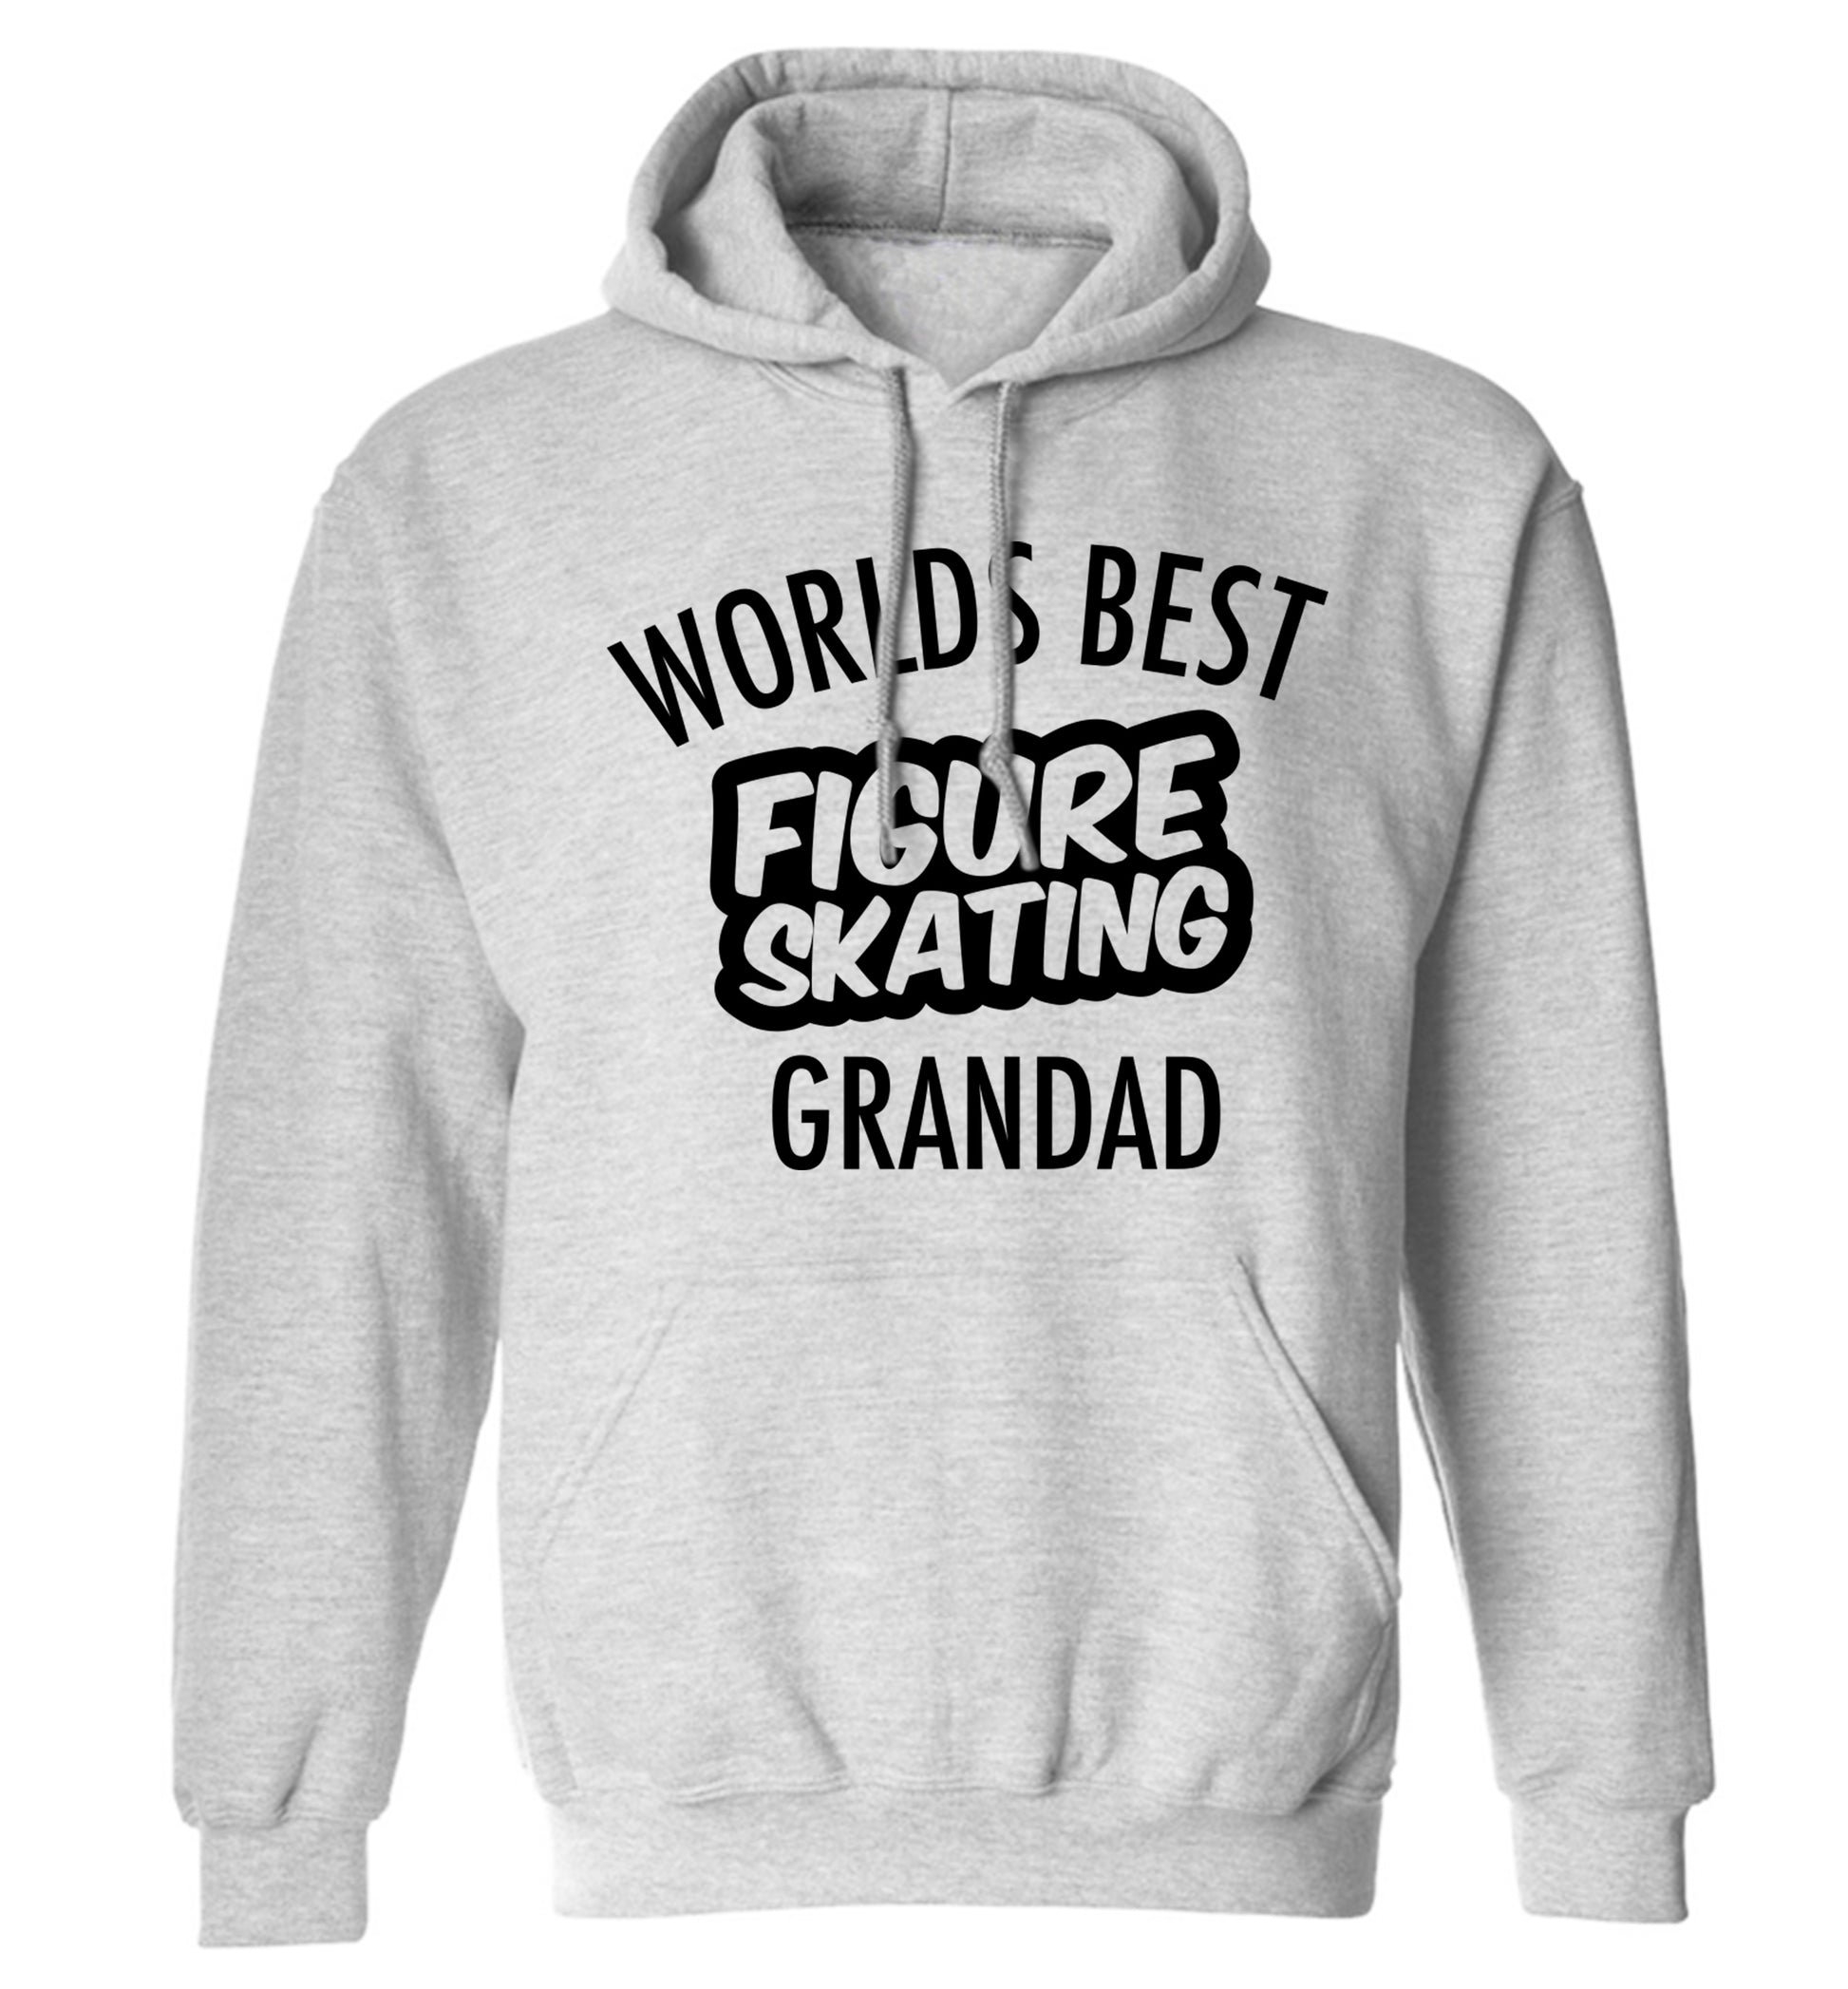 Worlds best figure skating grandad adults unisexgrey hoodie 2XL